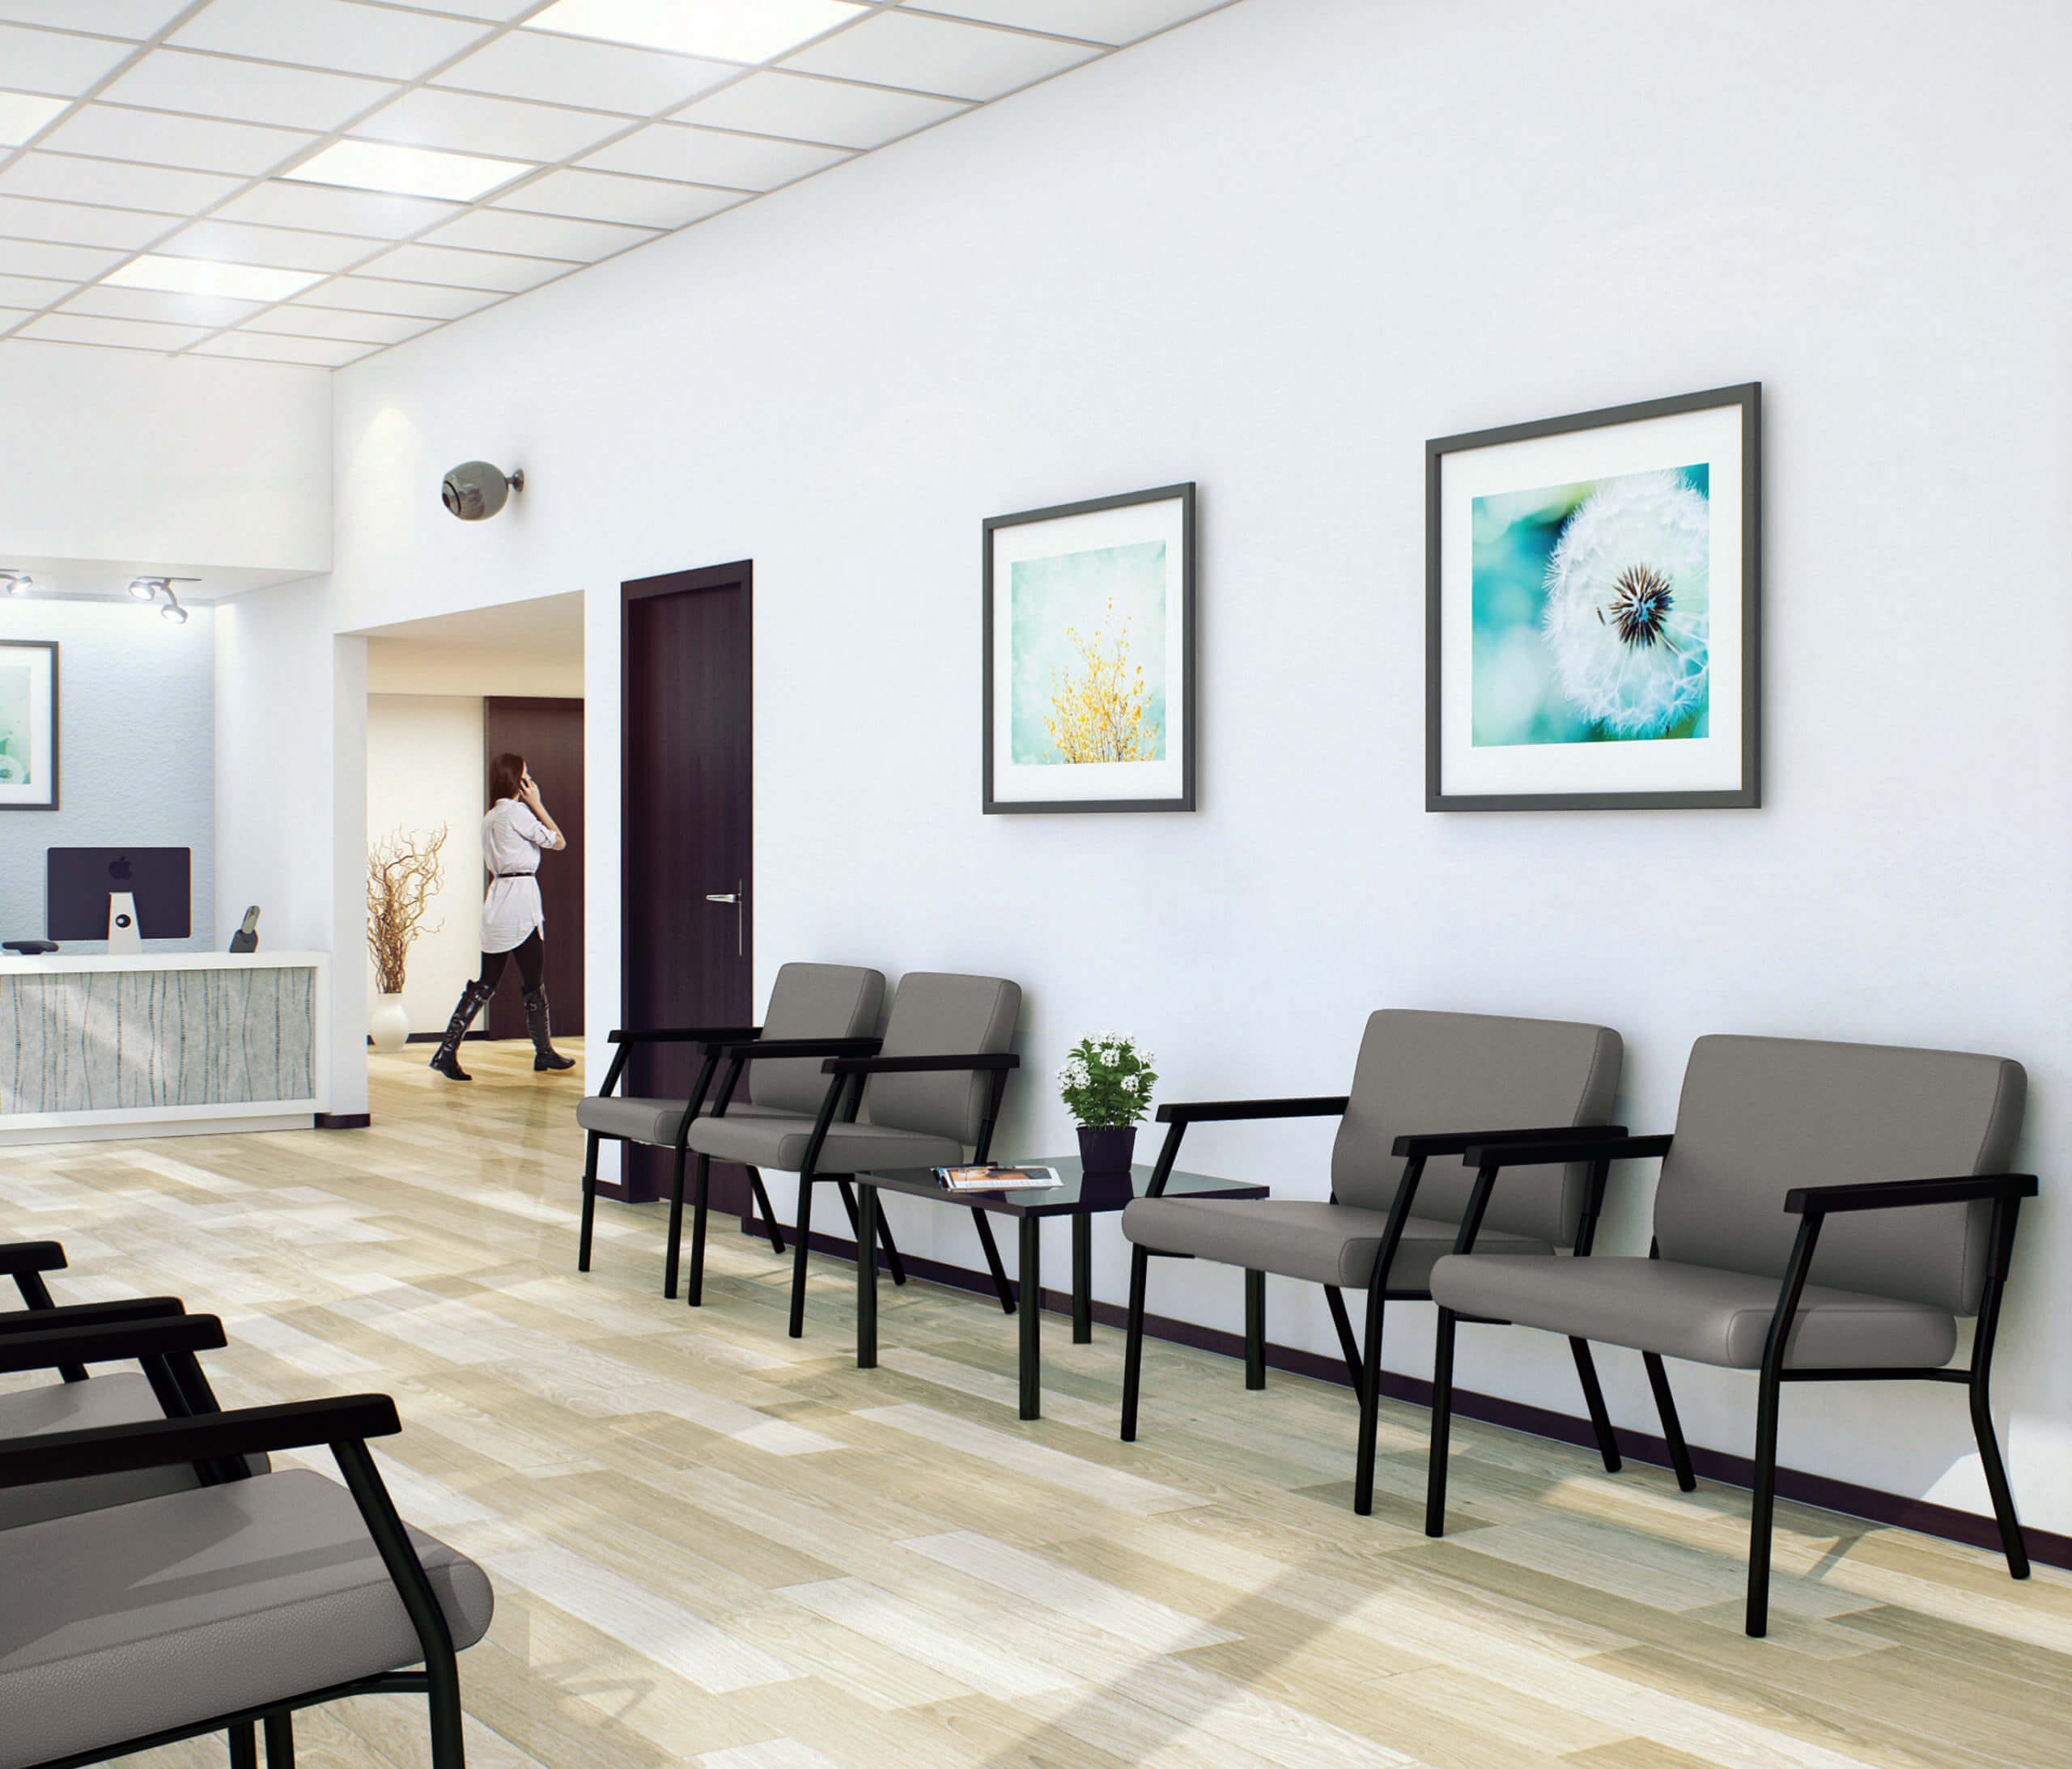 Buro Concord healthcare chair in rendered clinic reception scene